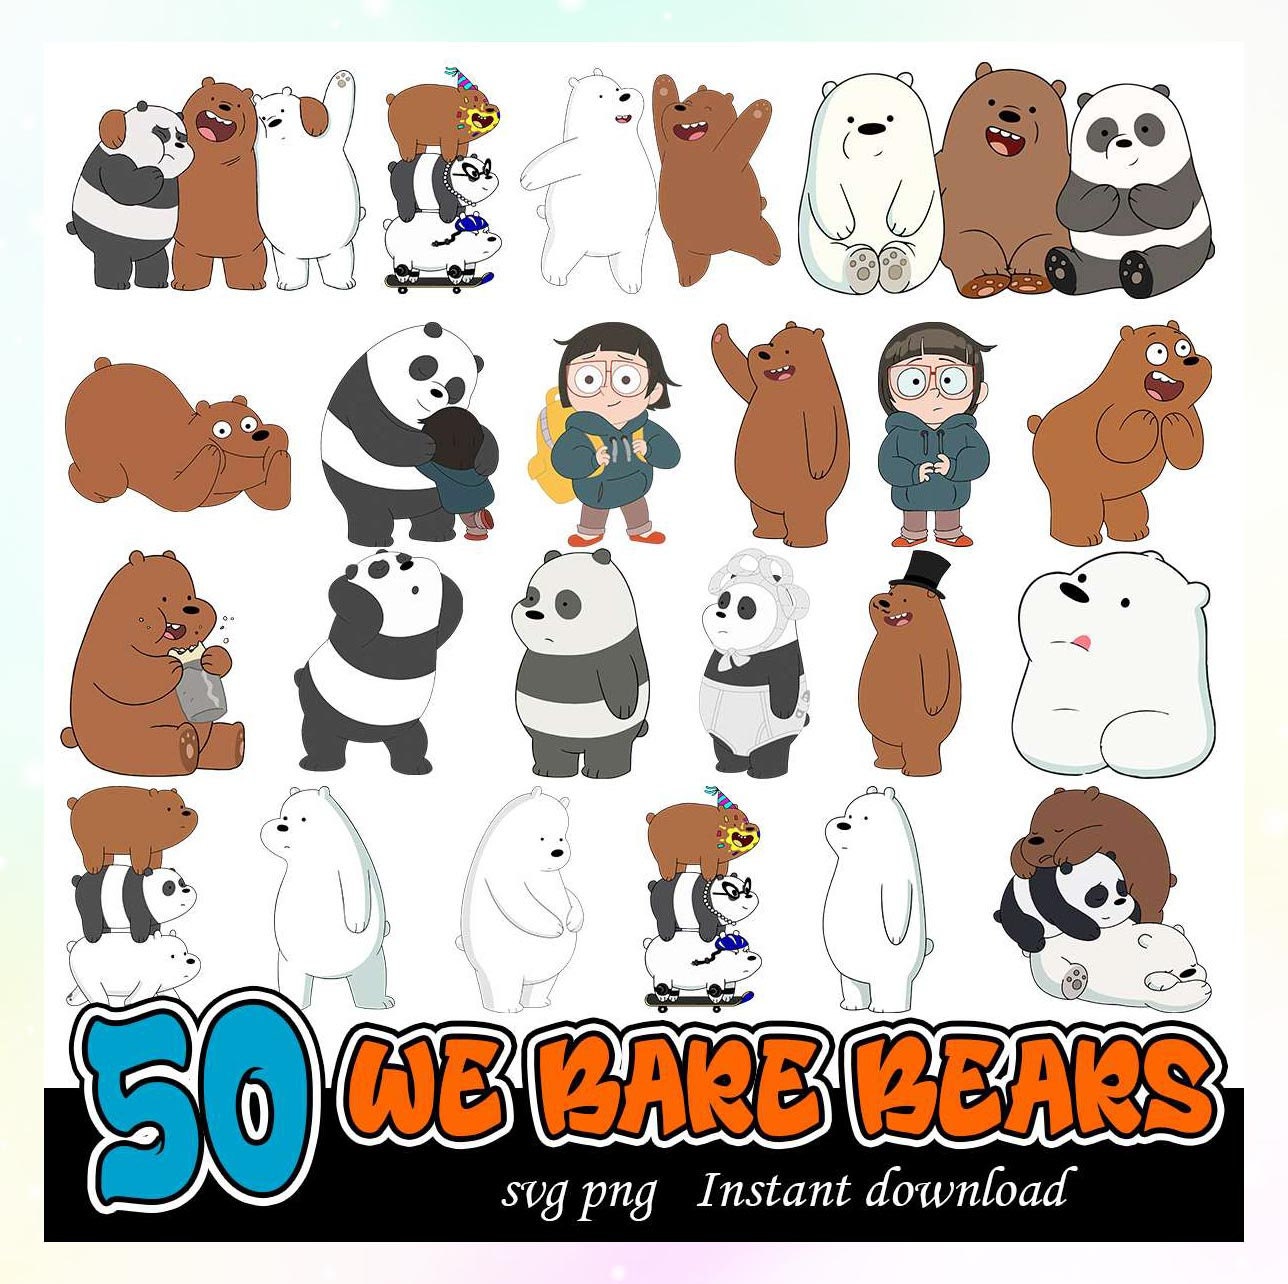 Nom Nom - We Bare Bears Sticker